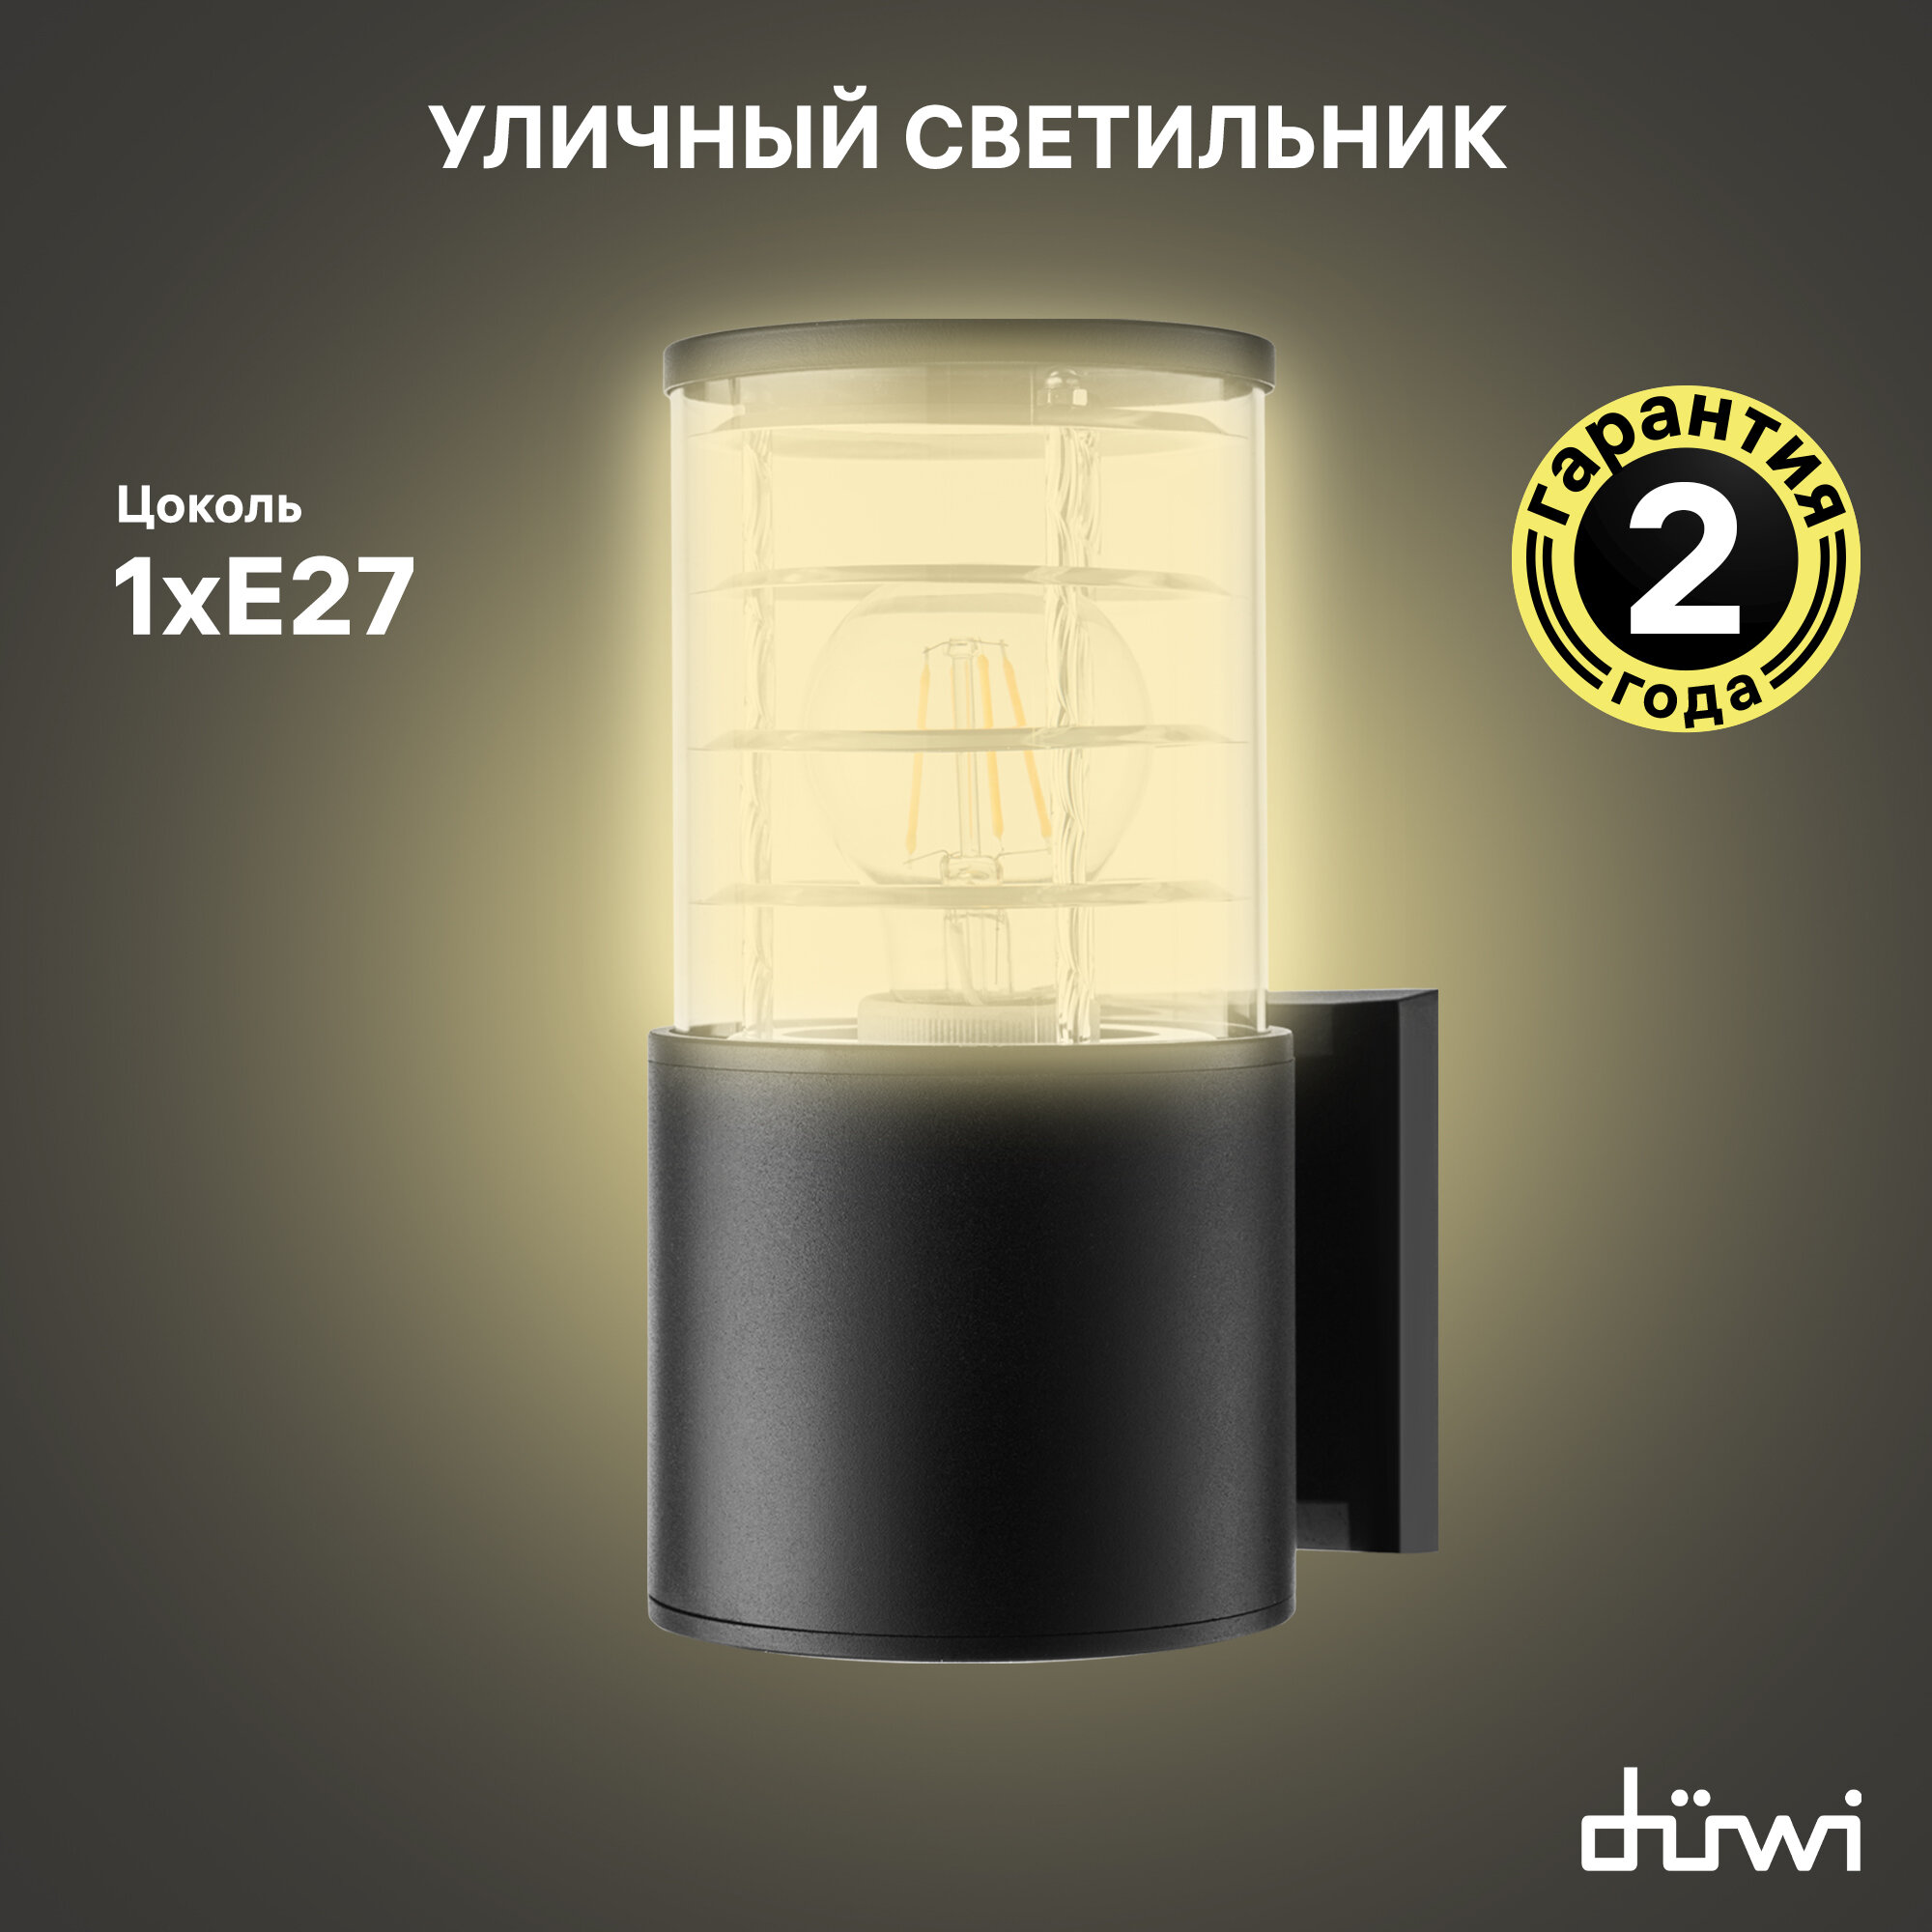 Светильник настенный накладной Nuovo 1хЕ27х60Вт IP65 175х108х220мм алюминий/стекло черный duwi 24393 9